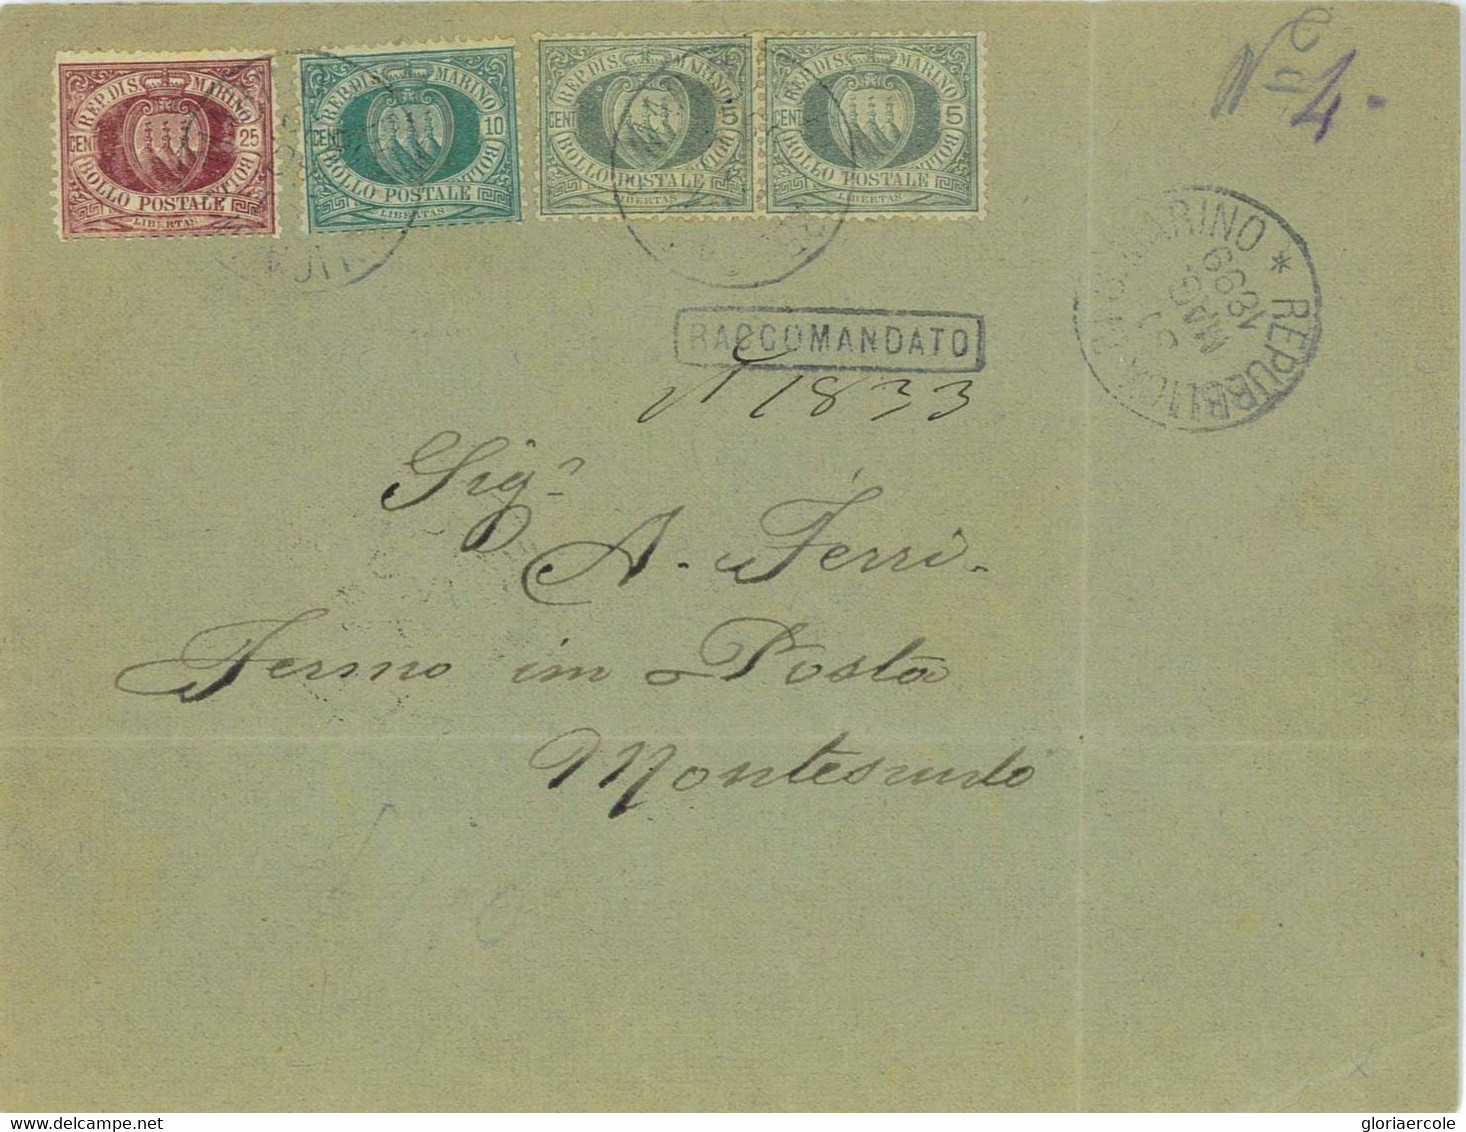 P0311  - SAN MARINO  - STORIA POSTALE - Busta RACCOMANDATA  Tricolore 1899 - Storia Postale